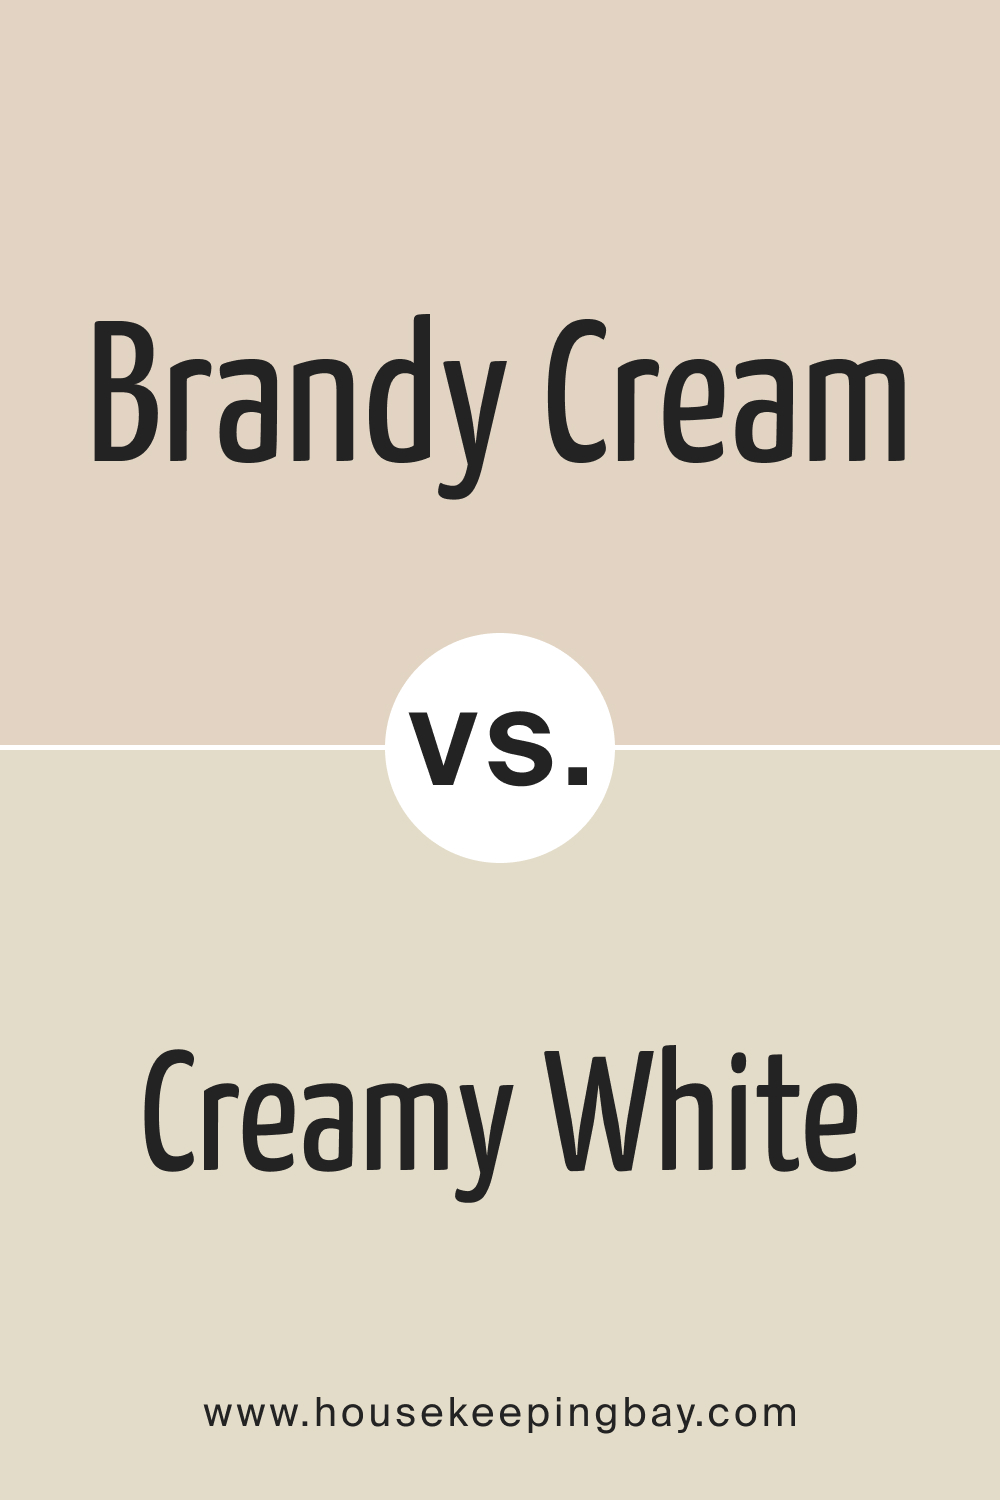 Brandy Cream OC 4 vs. OC 7 Creamy White